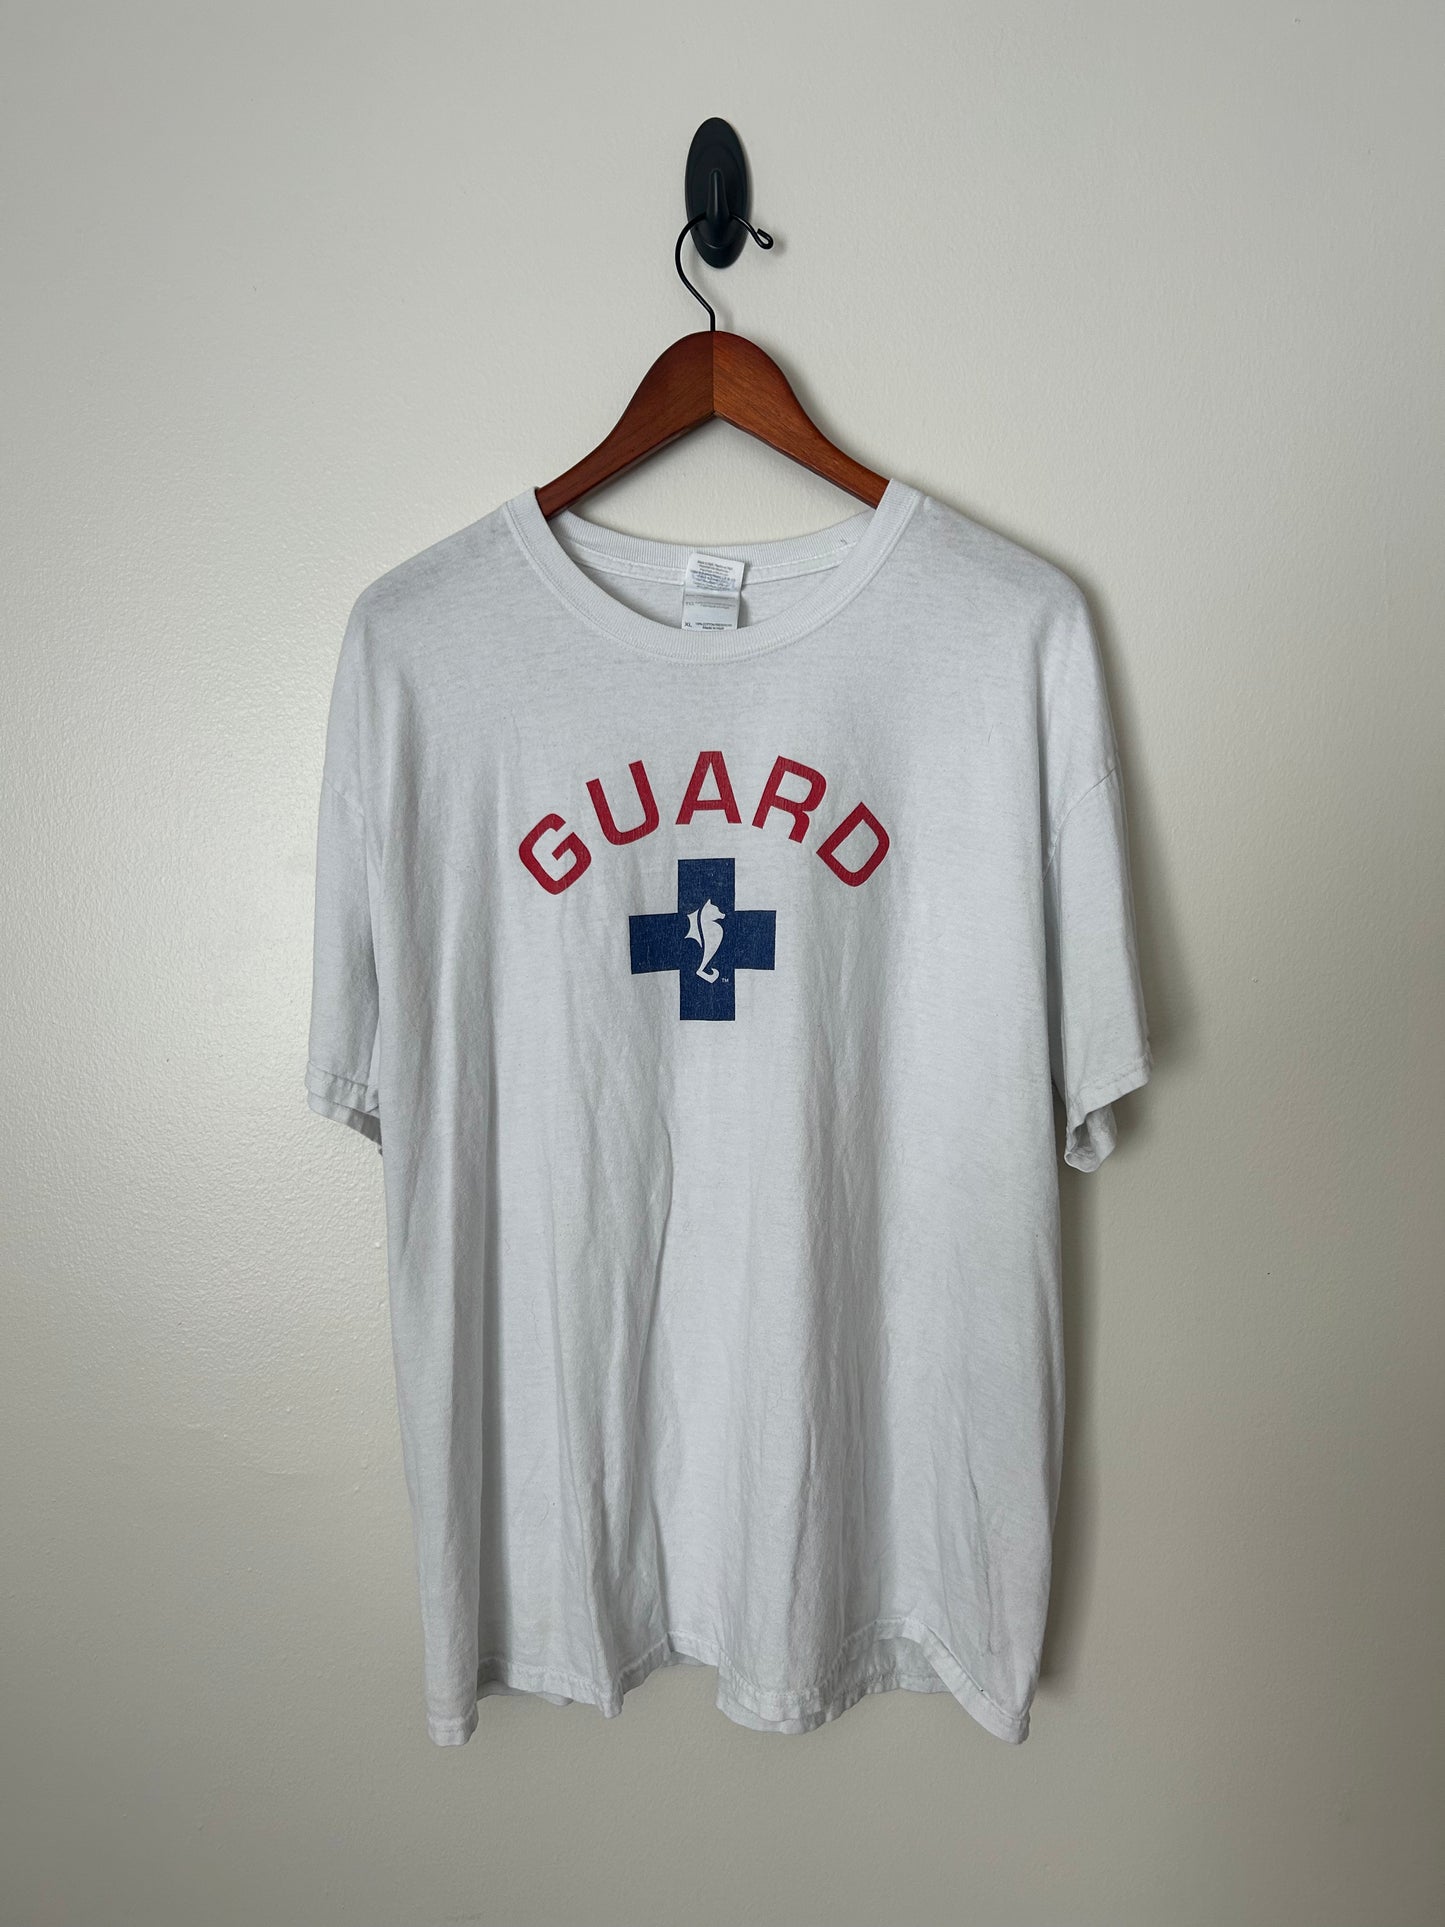 Life Guard T-Shirt - XL